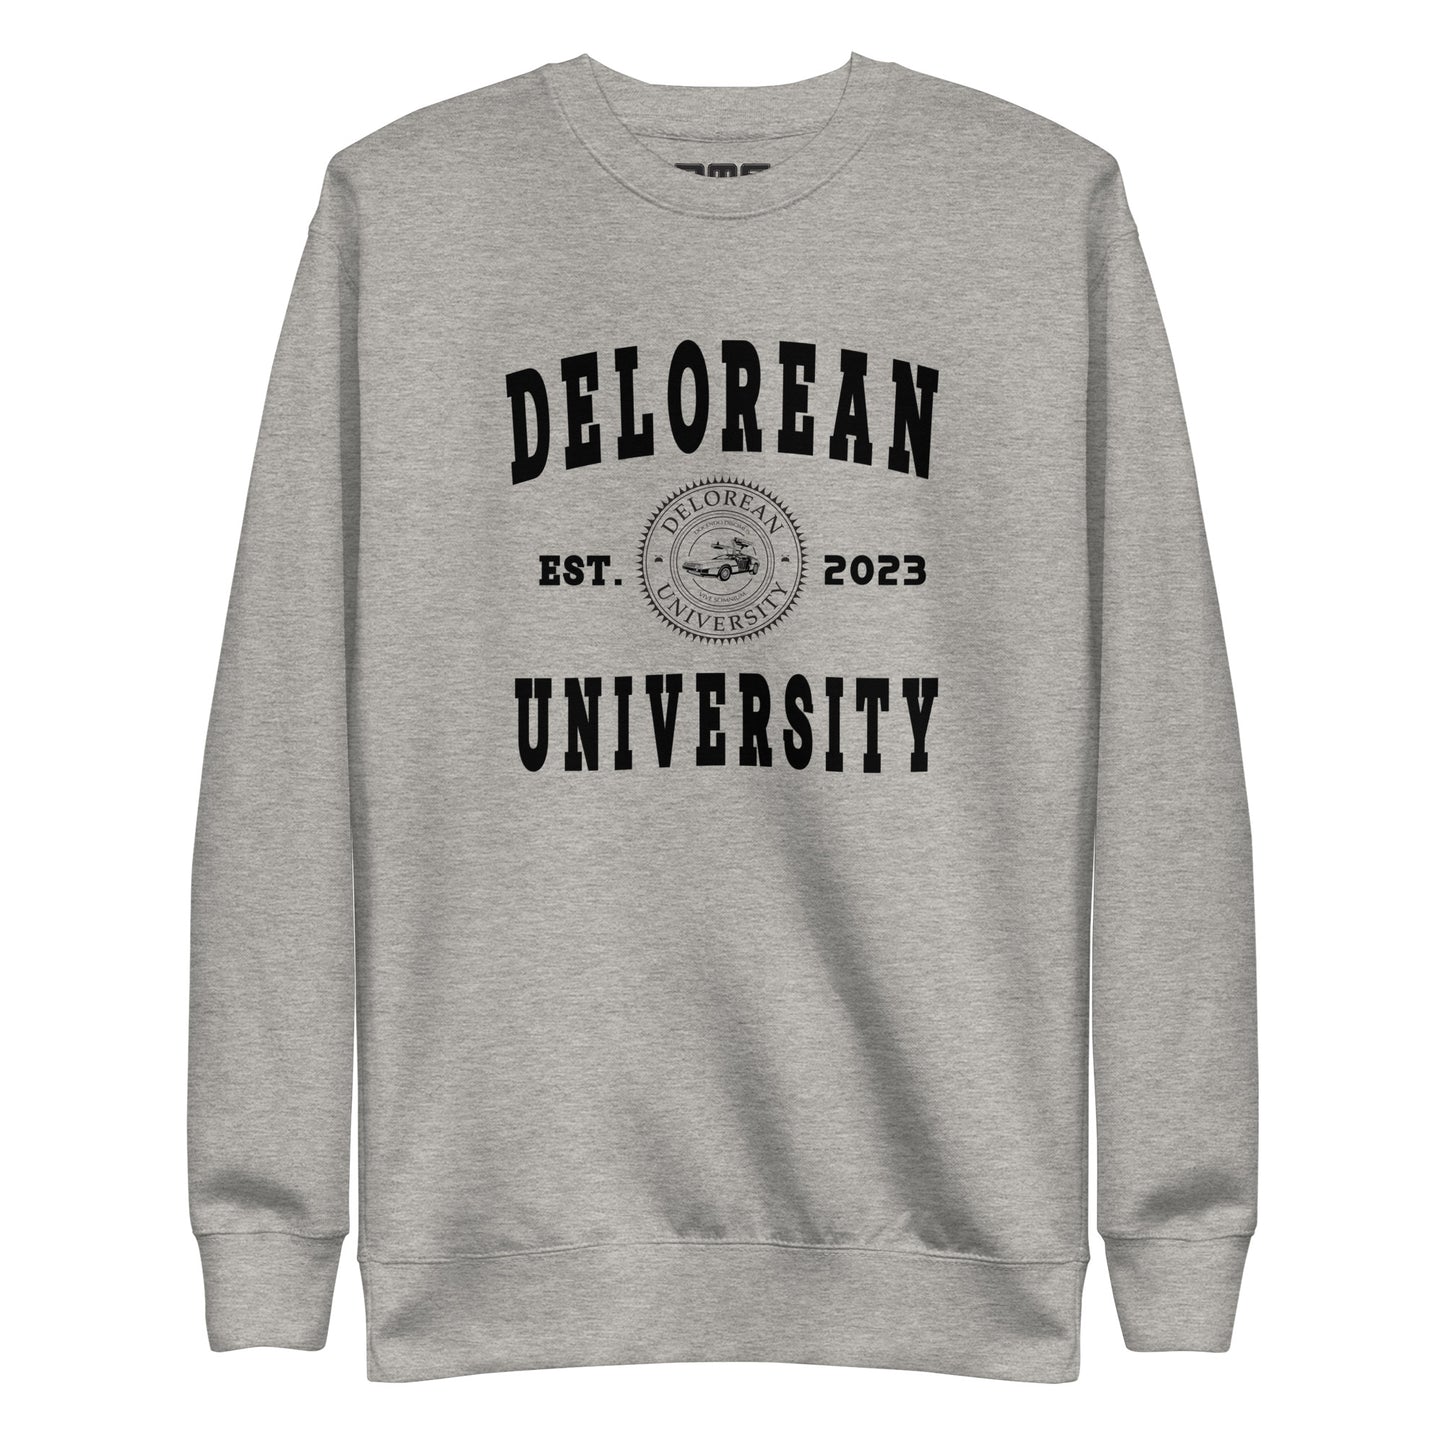 DeLorean University Sweatshirt